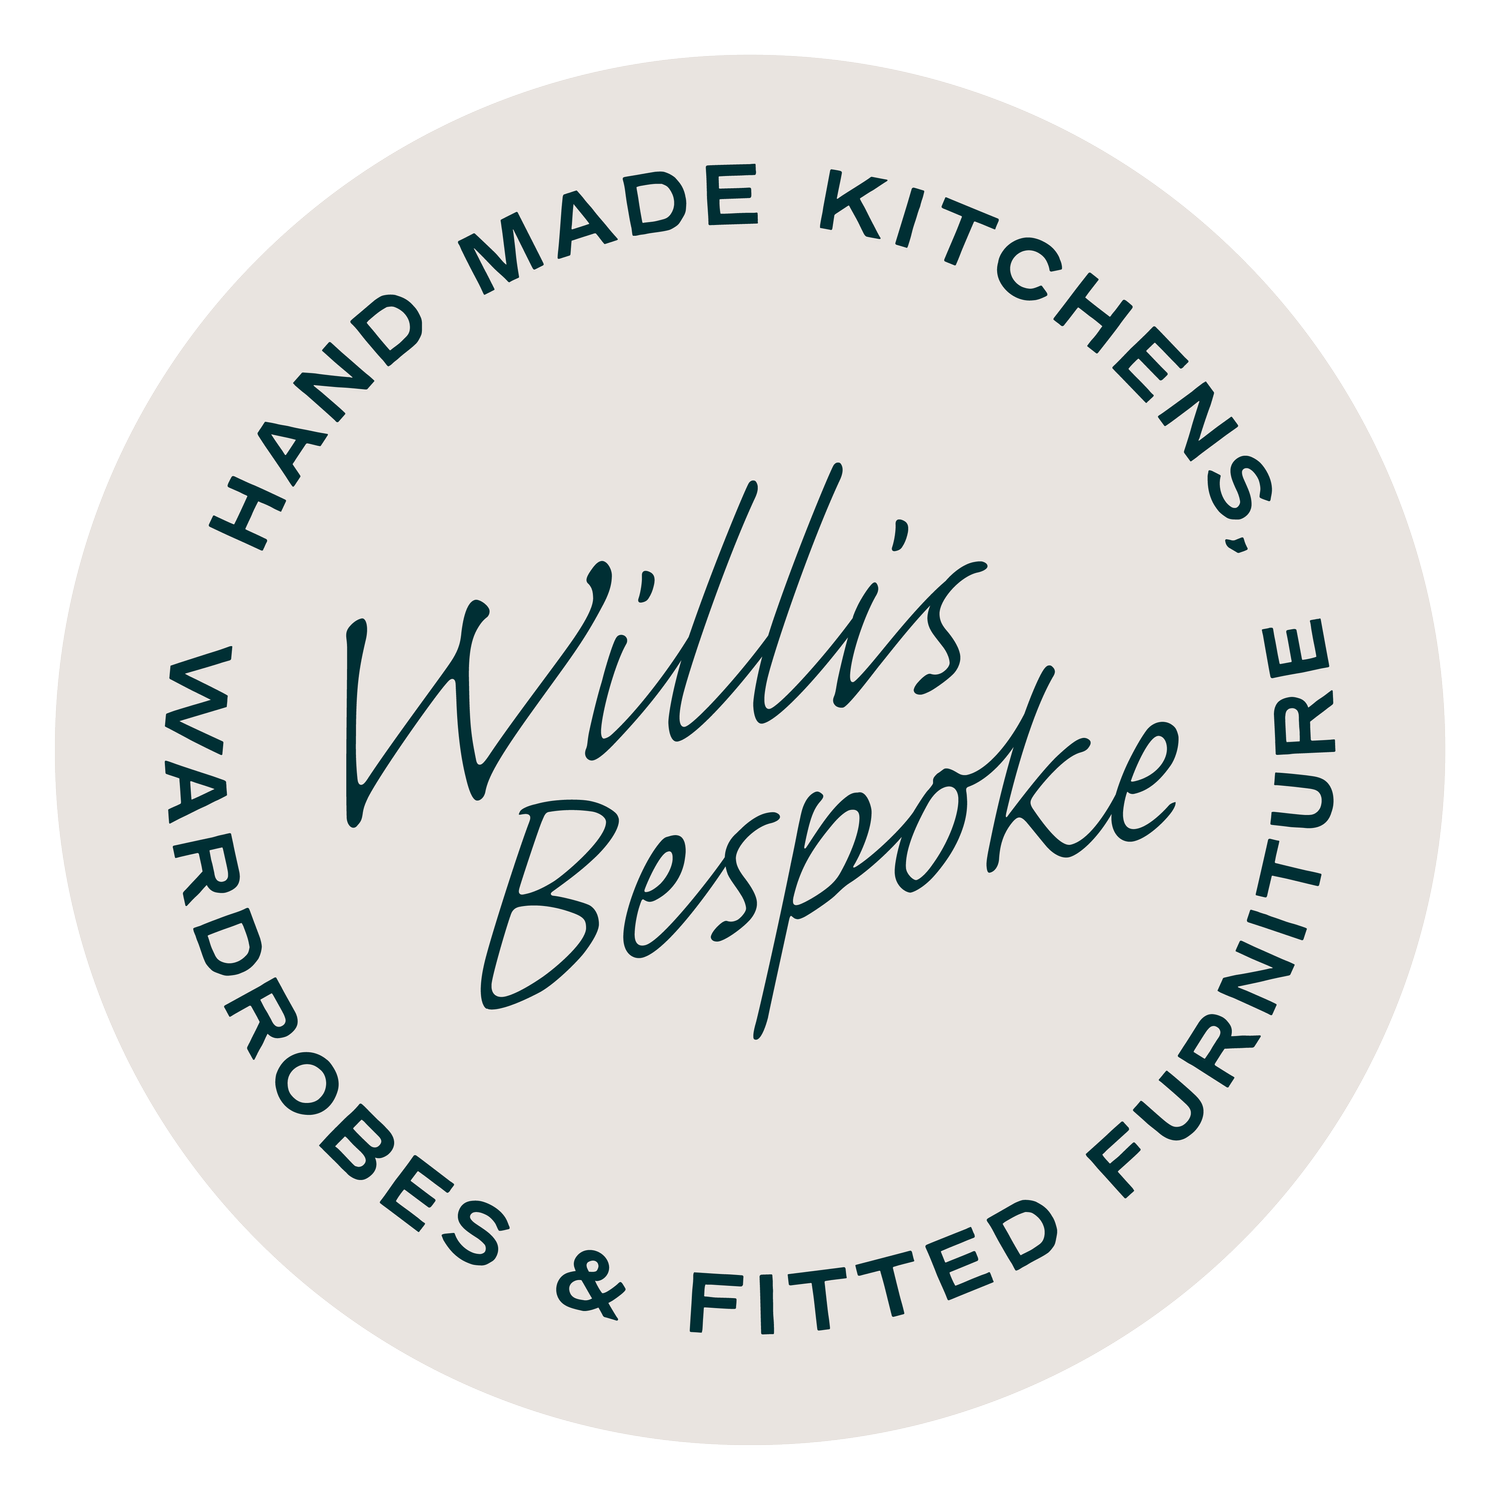 Willis Bespoke - Hand Made Kitchens and Wardrobes